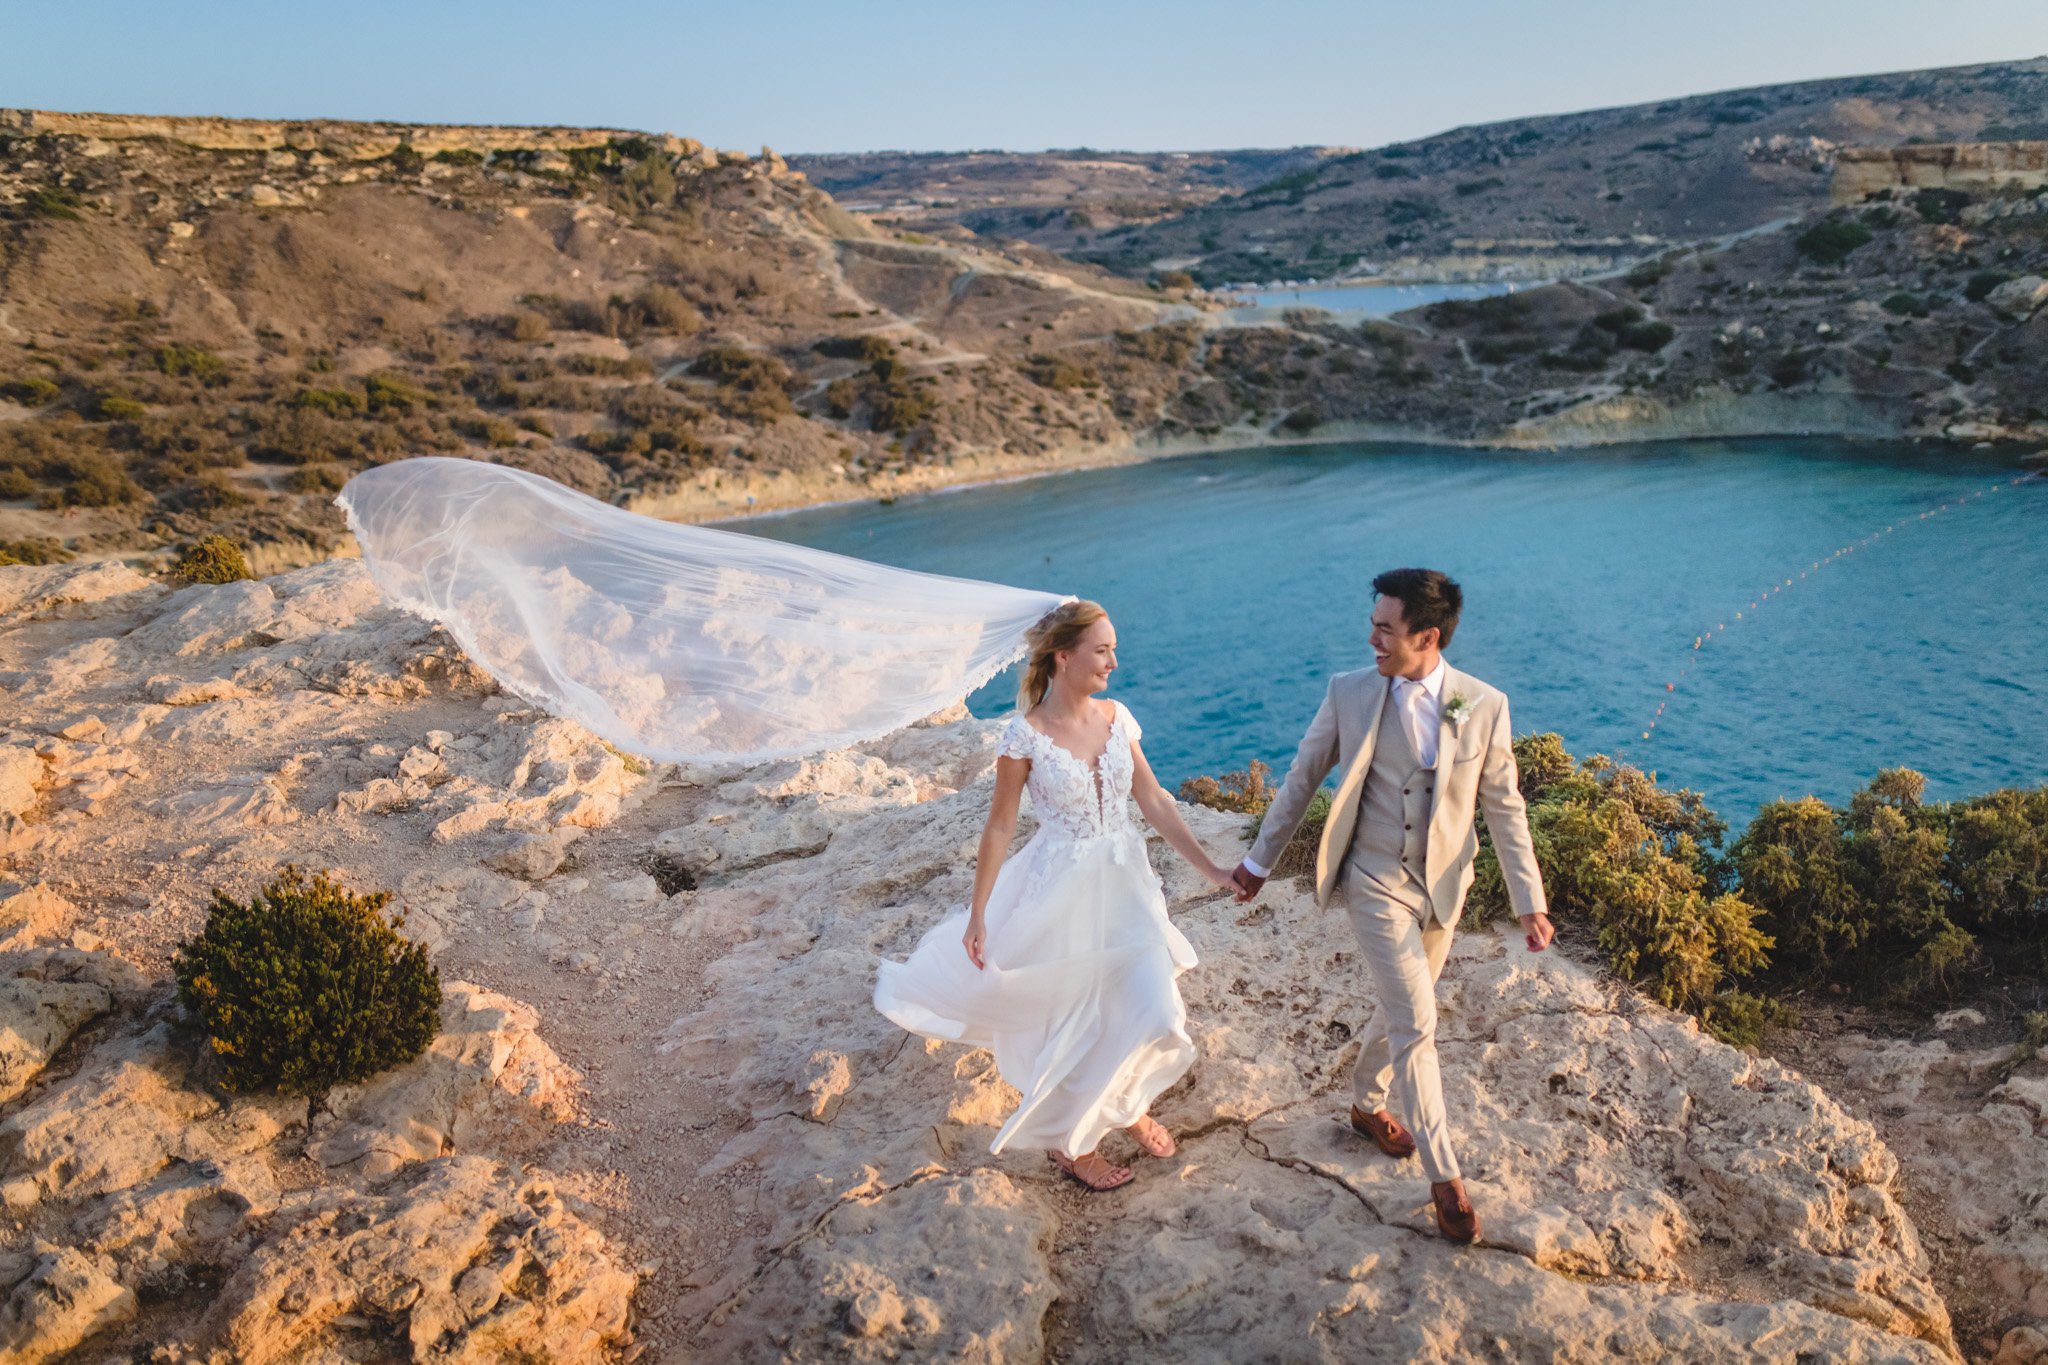 A typical wedding photo taken at Golden Bay in Malta